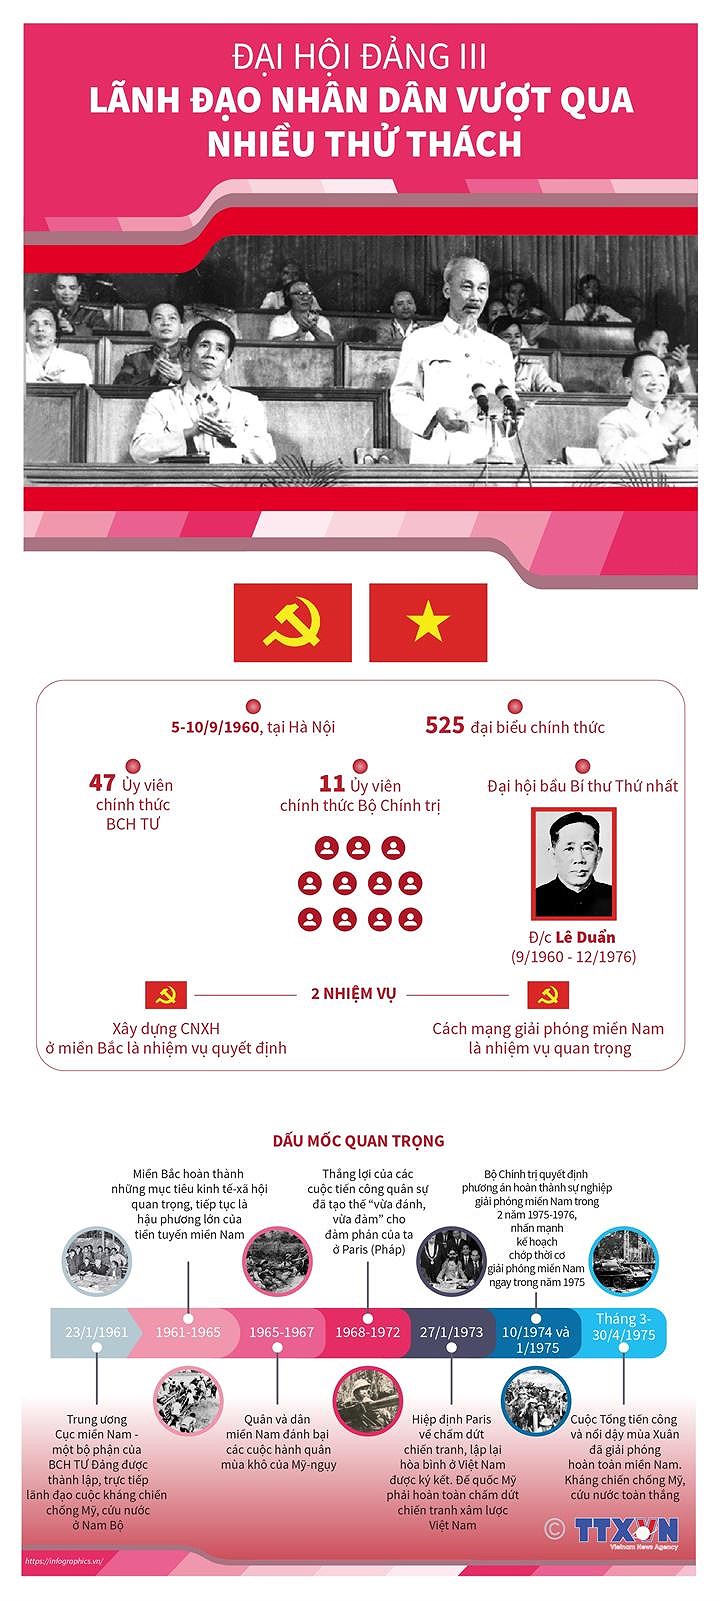 [Infographics] Dai hoi Dang III: Lanh dao nhan dan vuot qua thu thach hinh anh 1